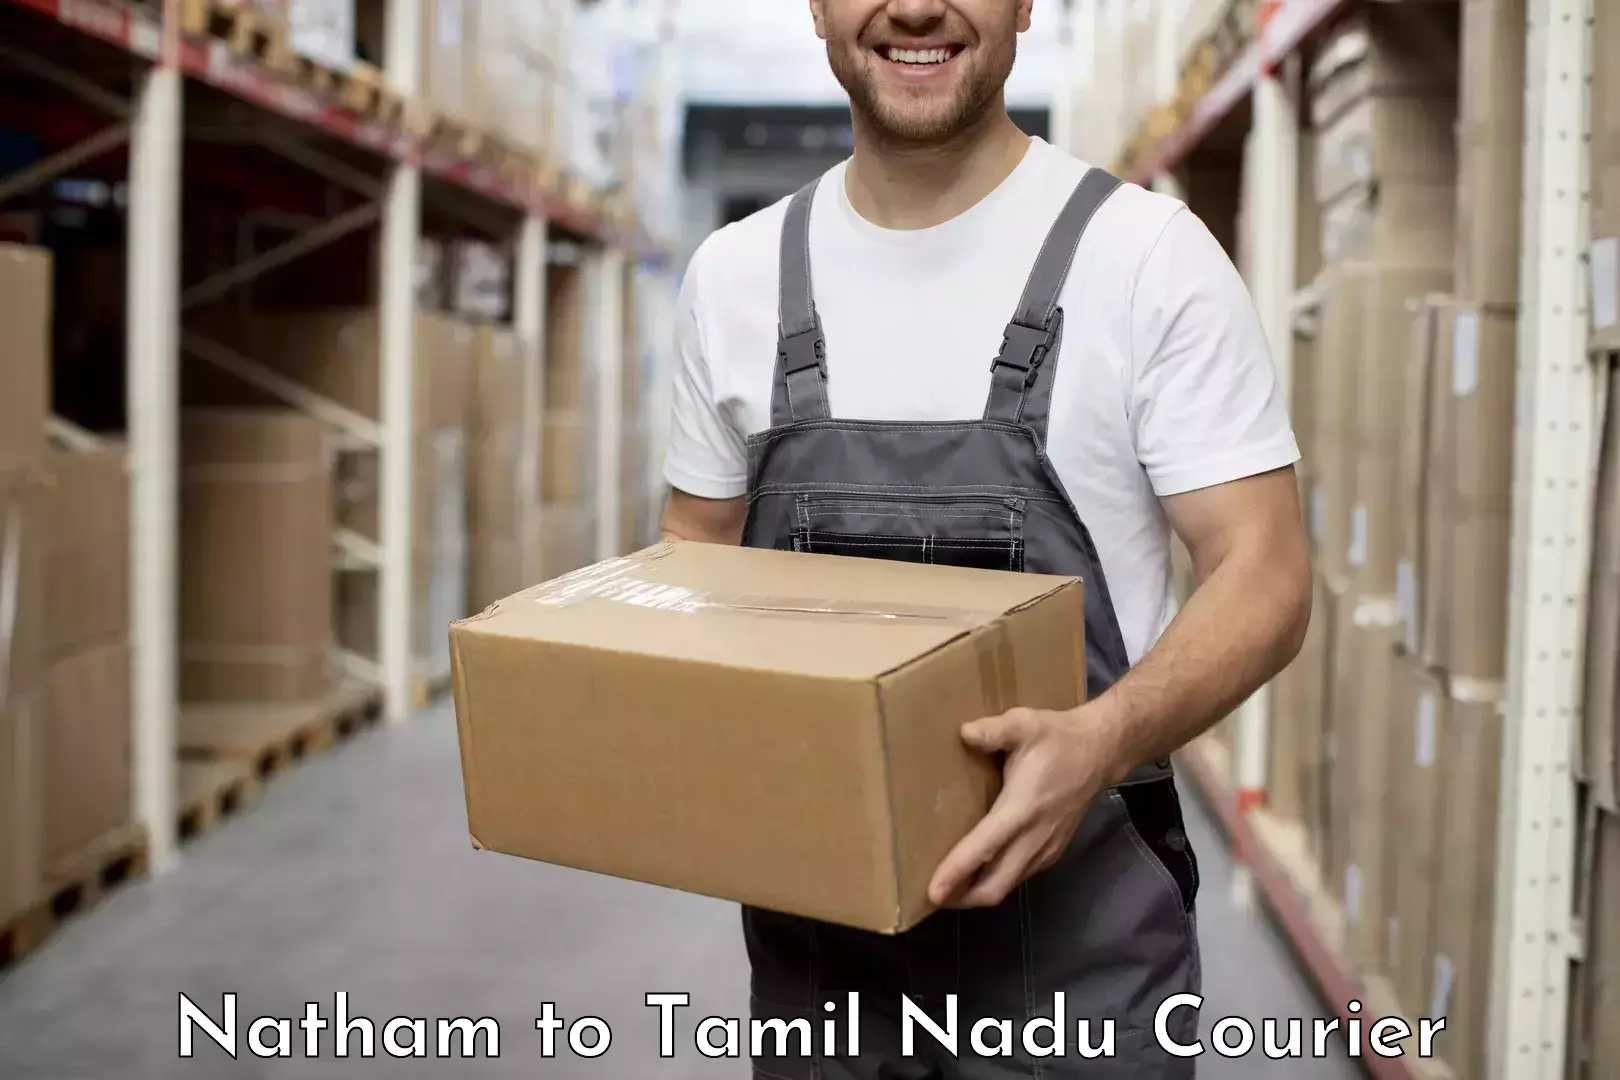 Cash on delivery service Natham to Tamil Nadu